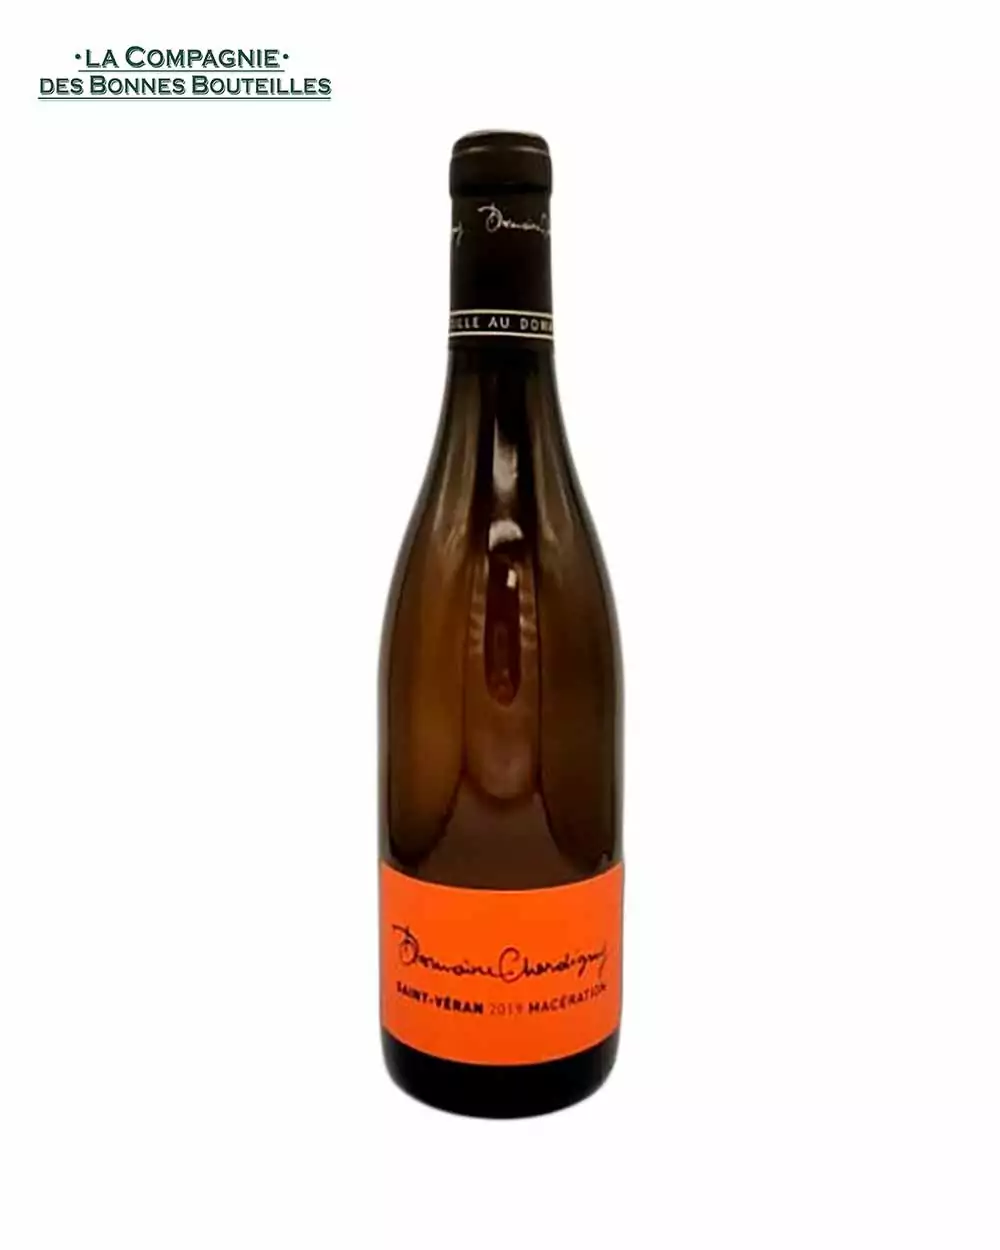 Vin blanc de macération - Domaine Chardigny - AOC Saint-Véran - 2020 - 75cl